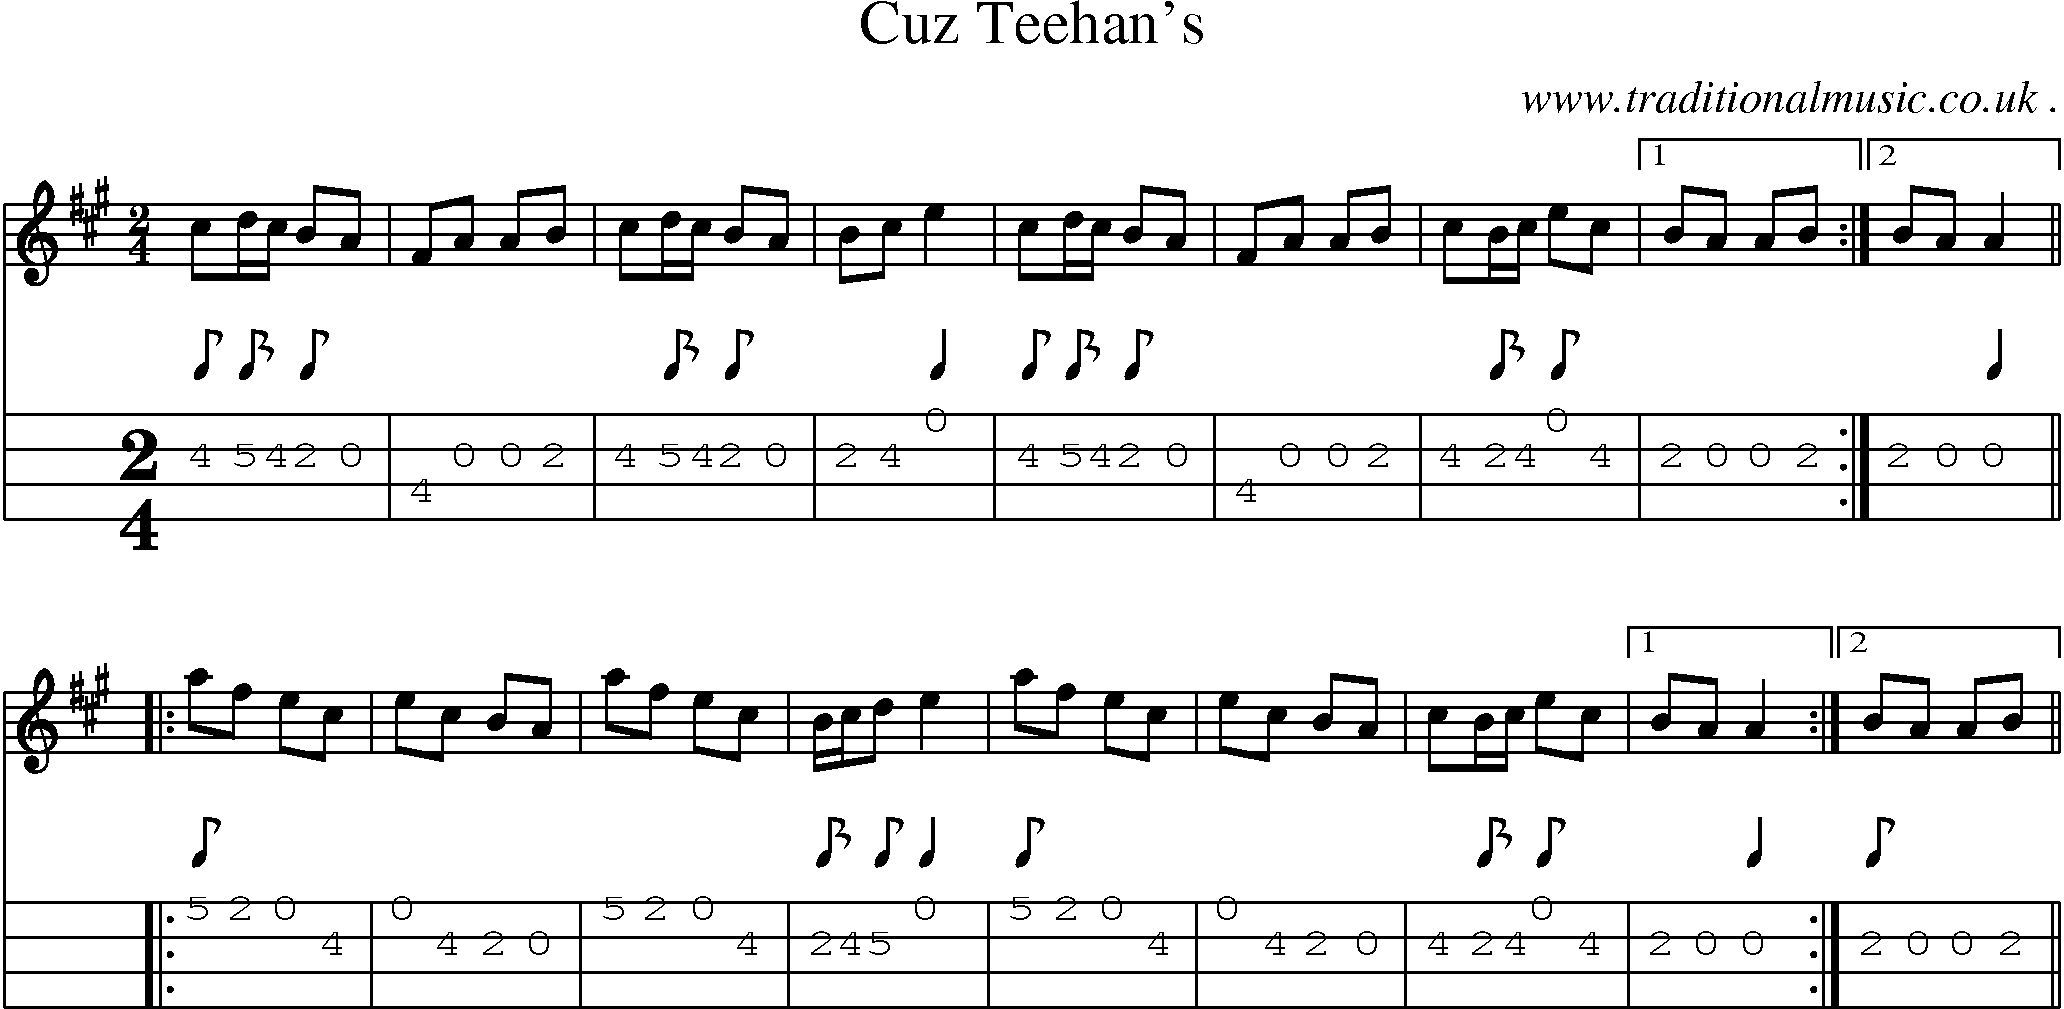 Sheet-Music and Mandolin Tabs for Cuz Teehans